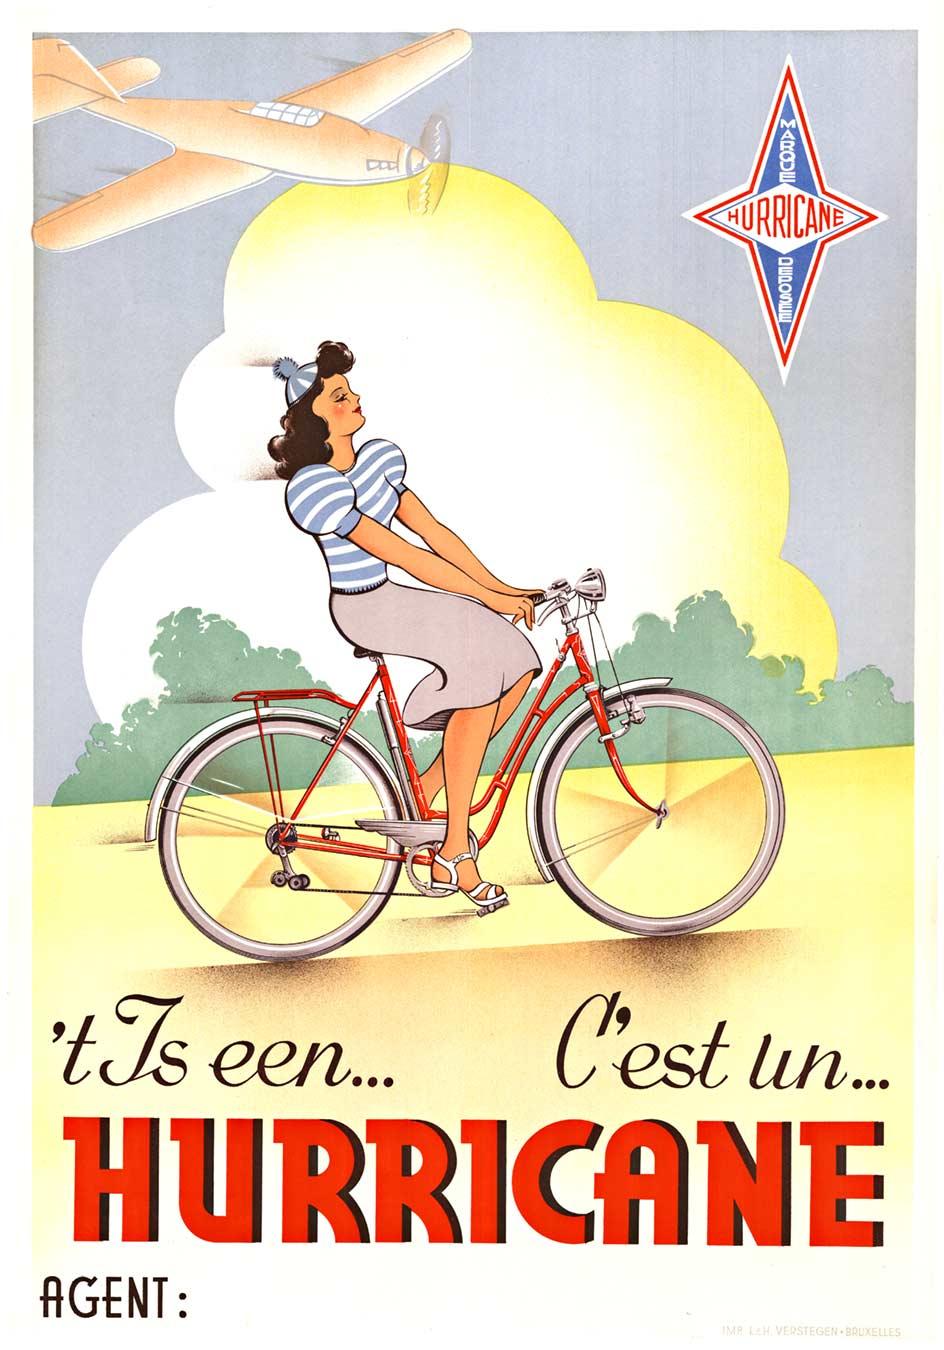 Unknown Figurative Print - Original "C'est un Hurricane" vintage bicycle pin-up style poster